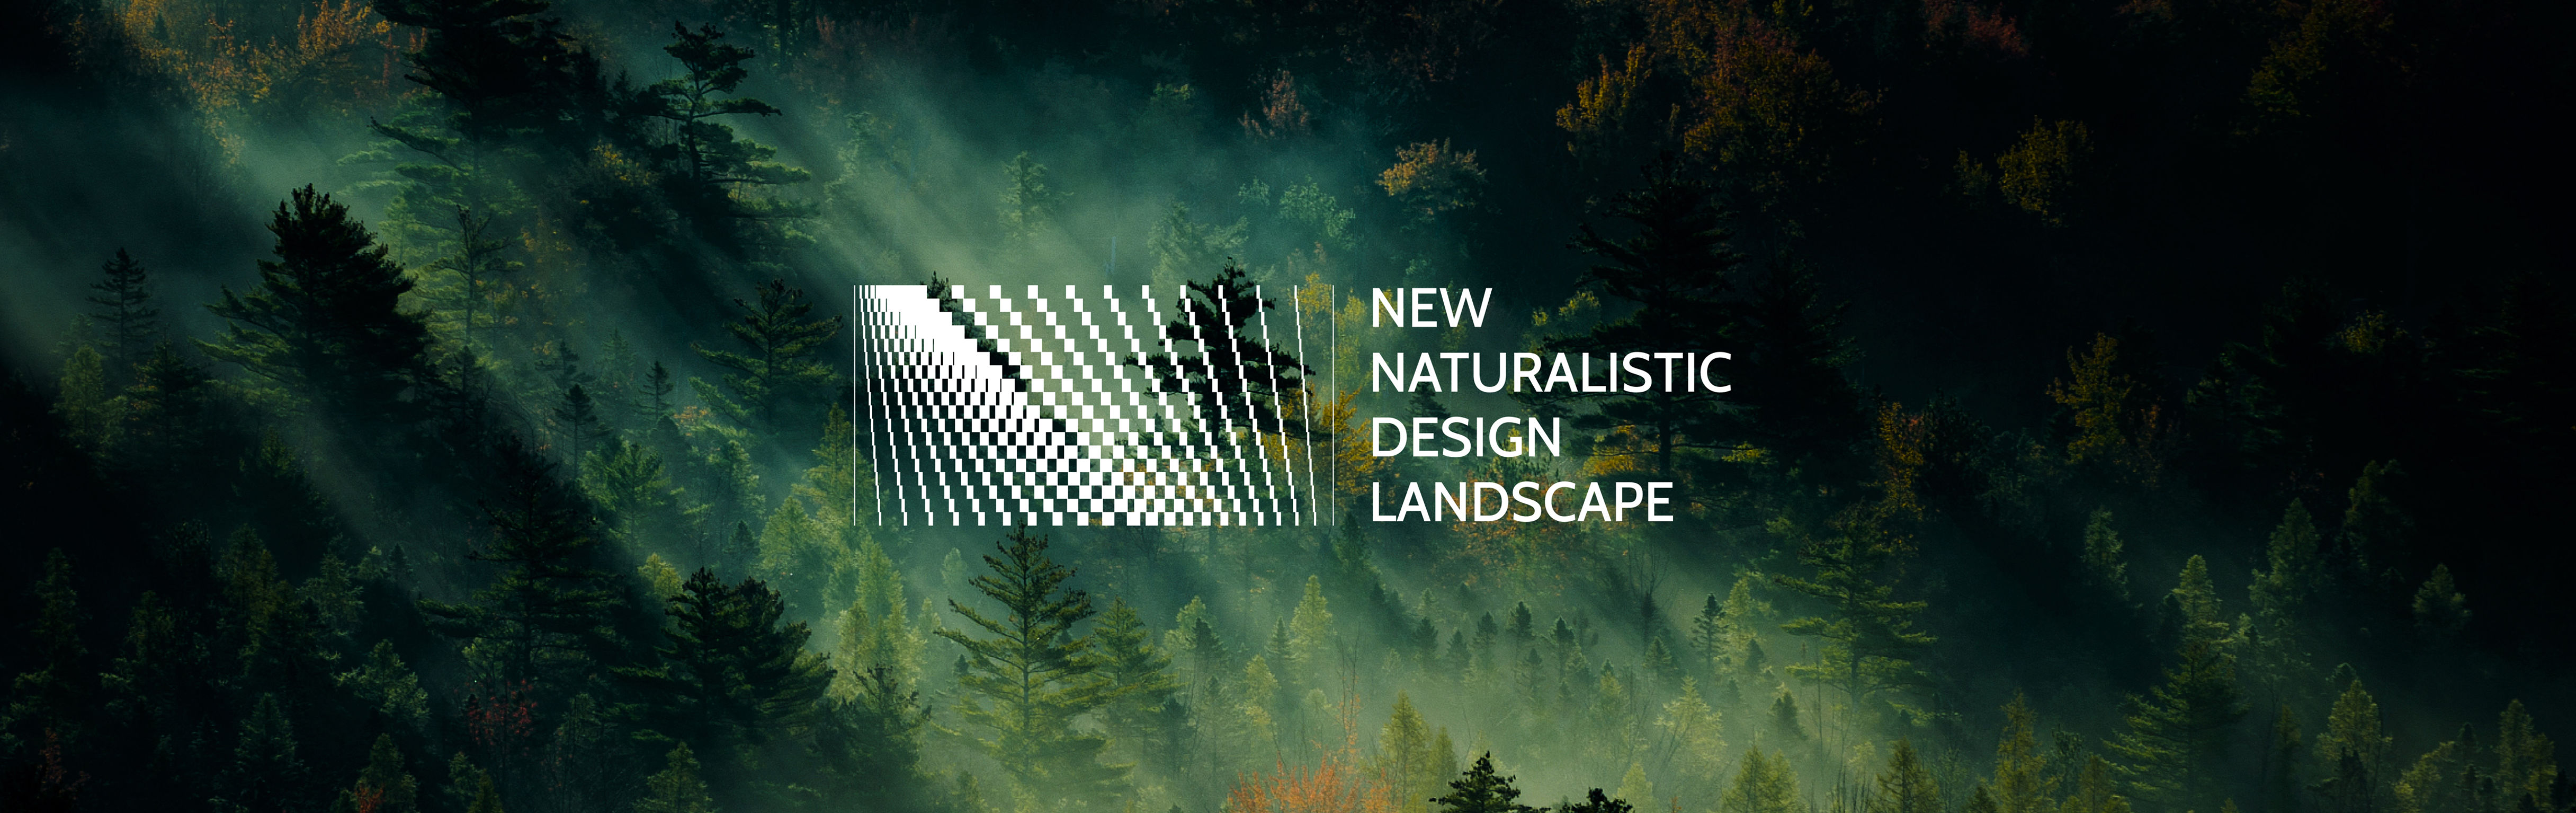 New Naturalistic Design Landscape